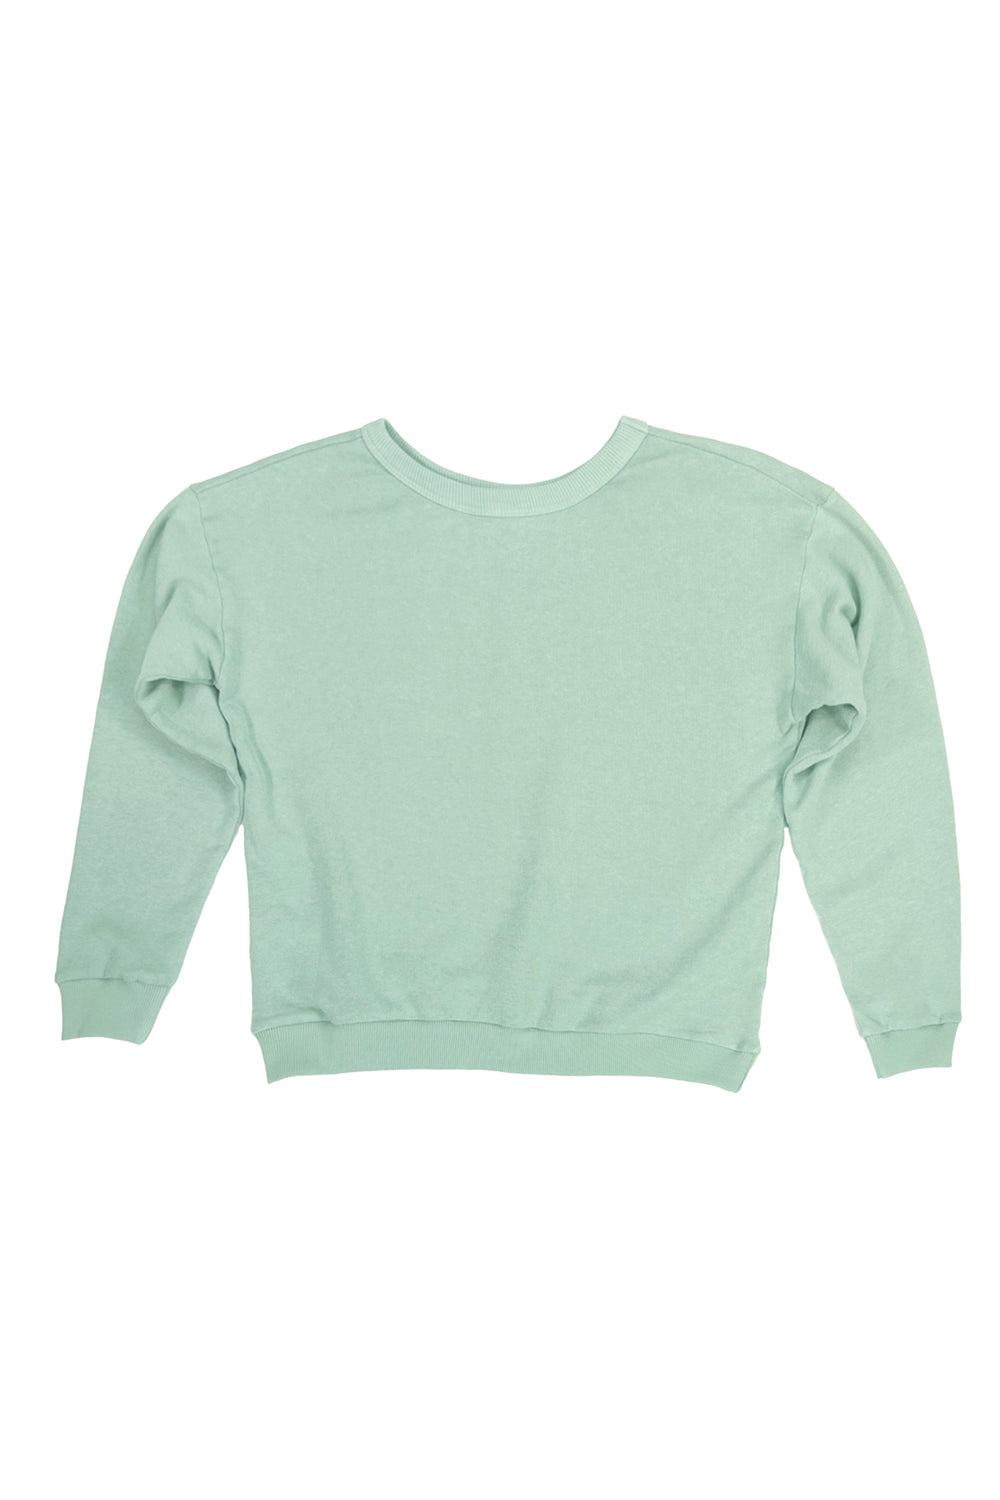 Crux Cropped Sweatshirt Jungmaven & Accessories | Hemp Clothing